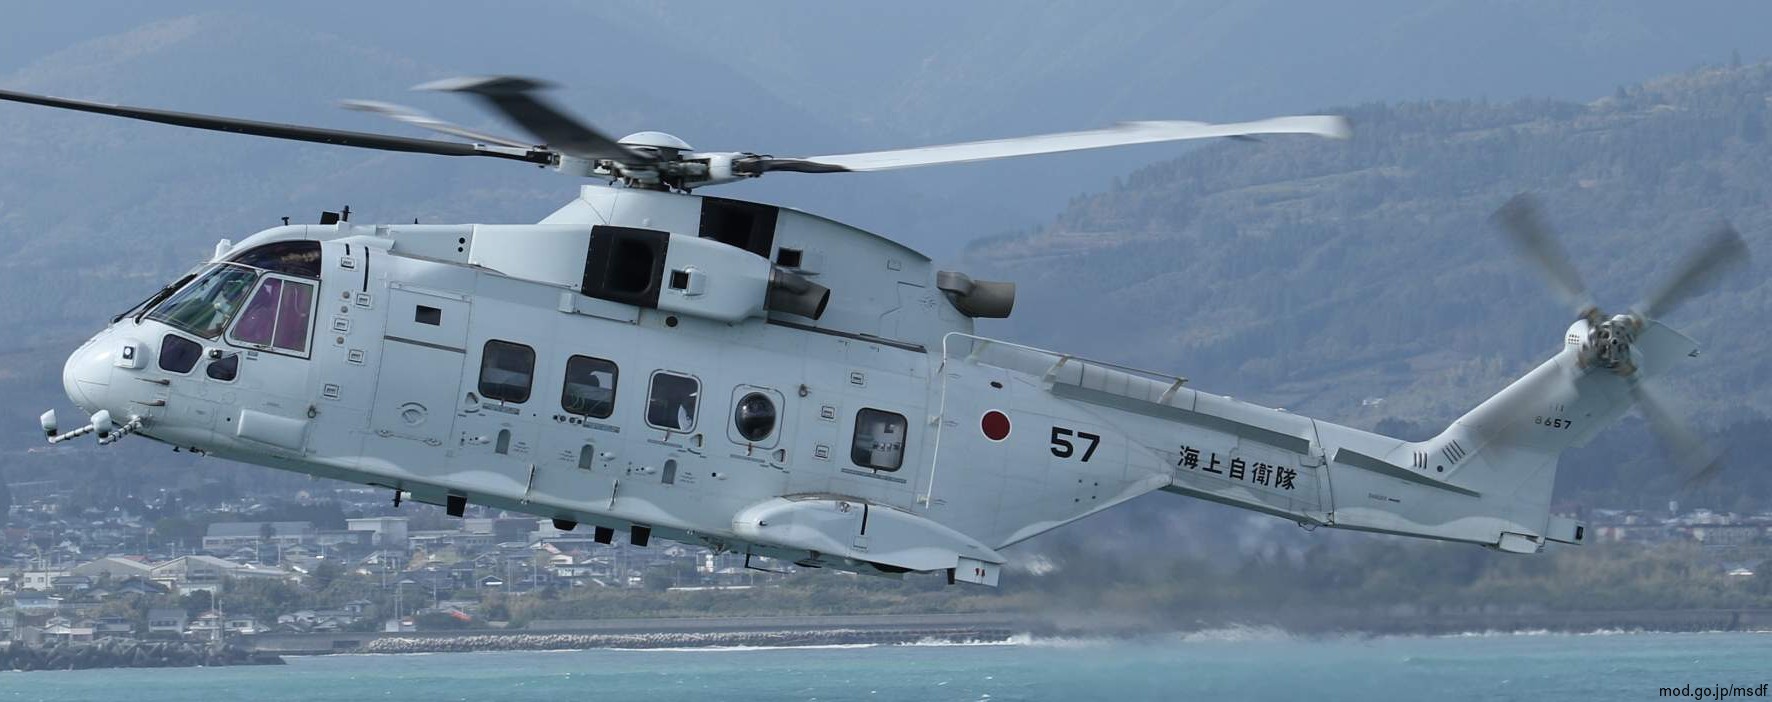 kawasaki mch-101 helicopter airborne mine countermeasures amcm japan maritime self defense force jmsdf merlin 8657 02